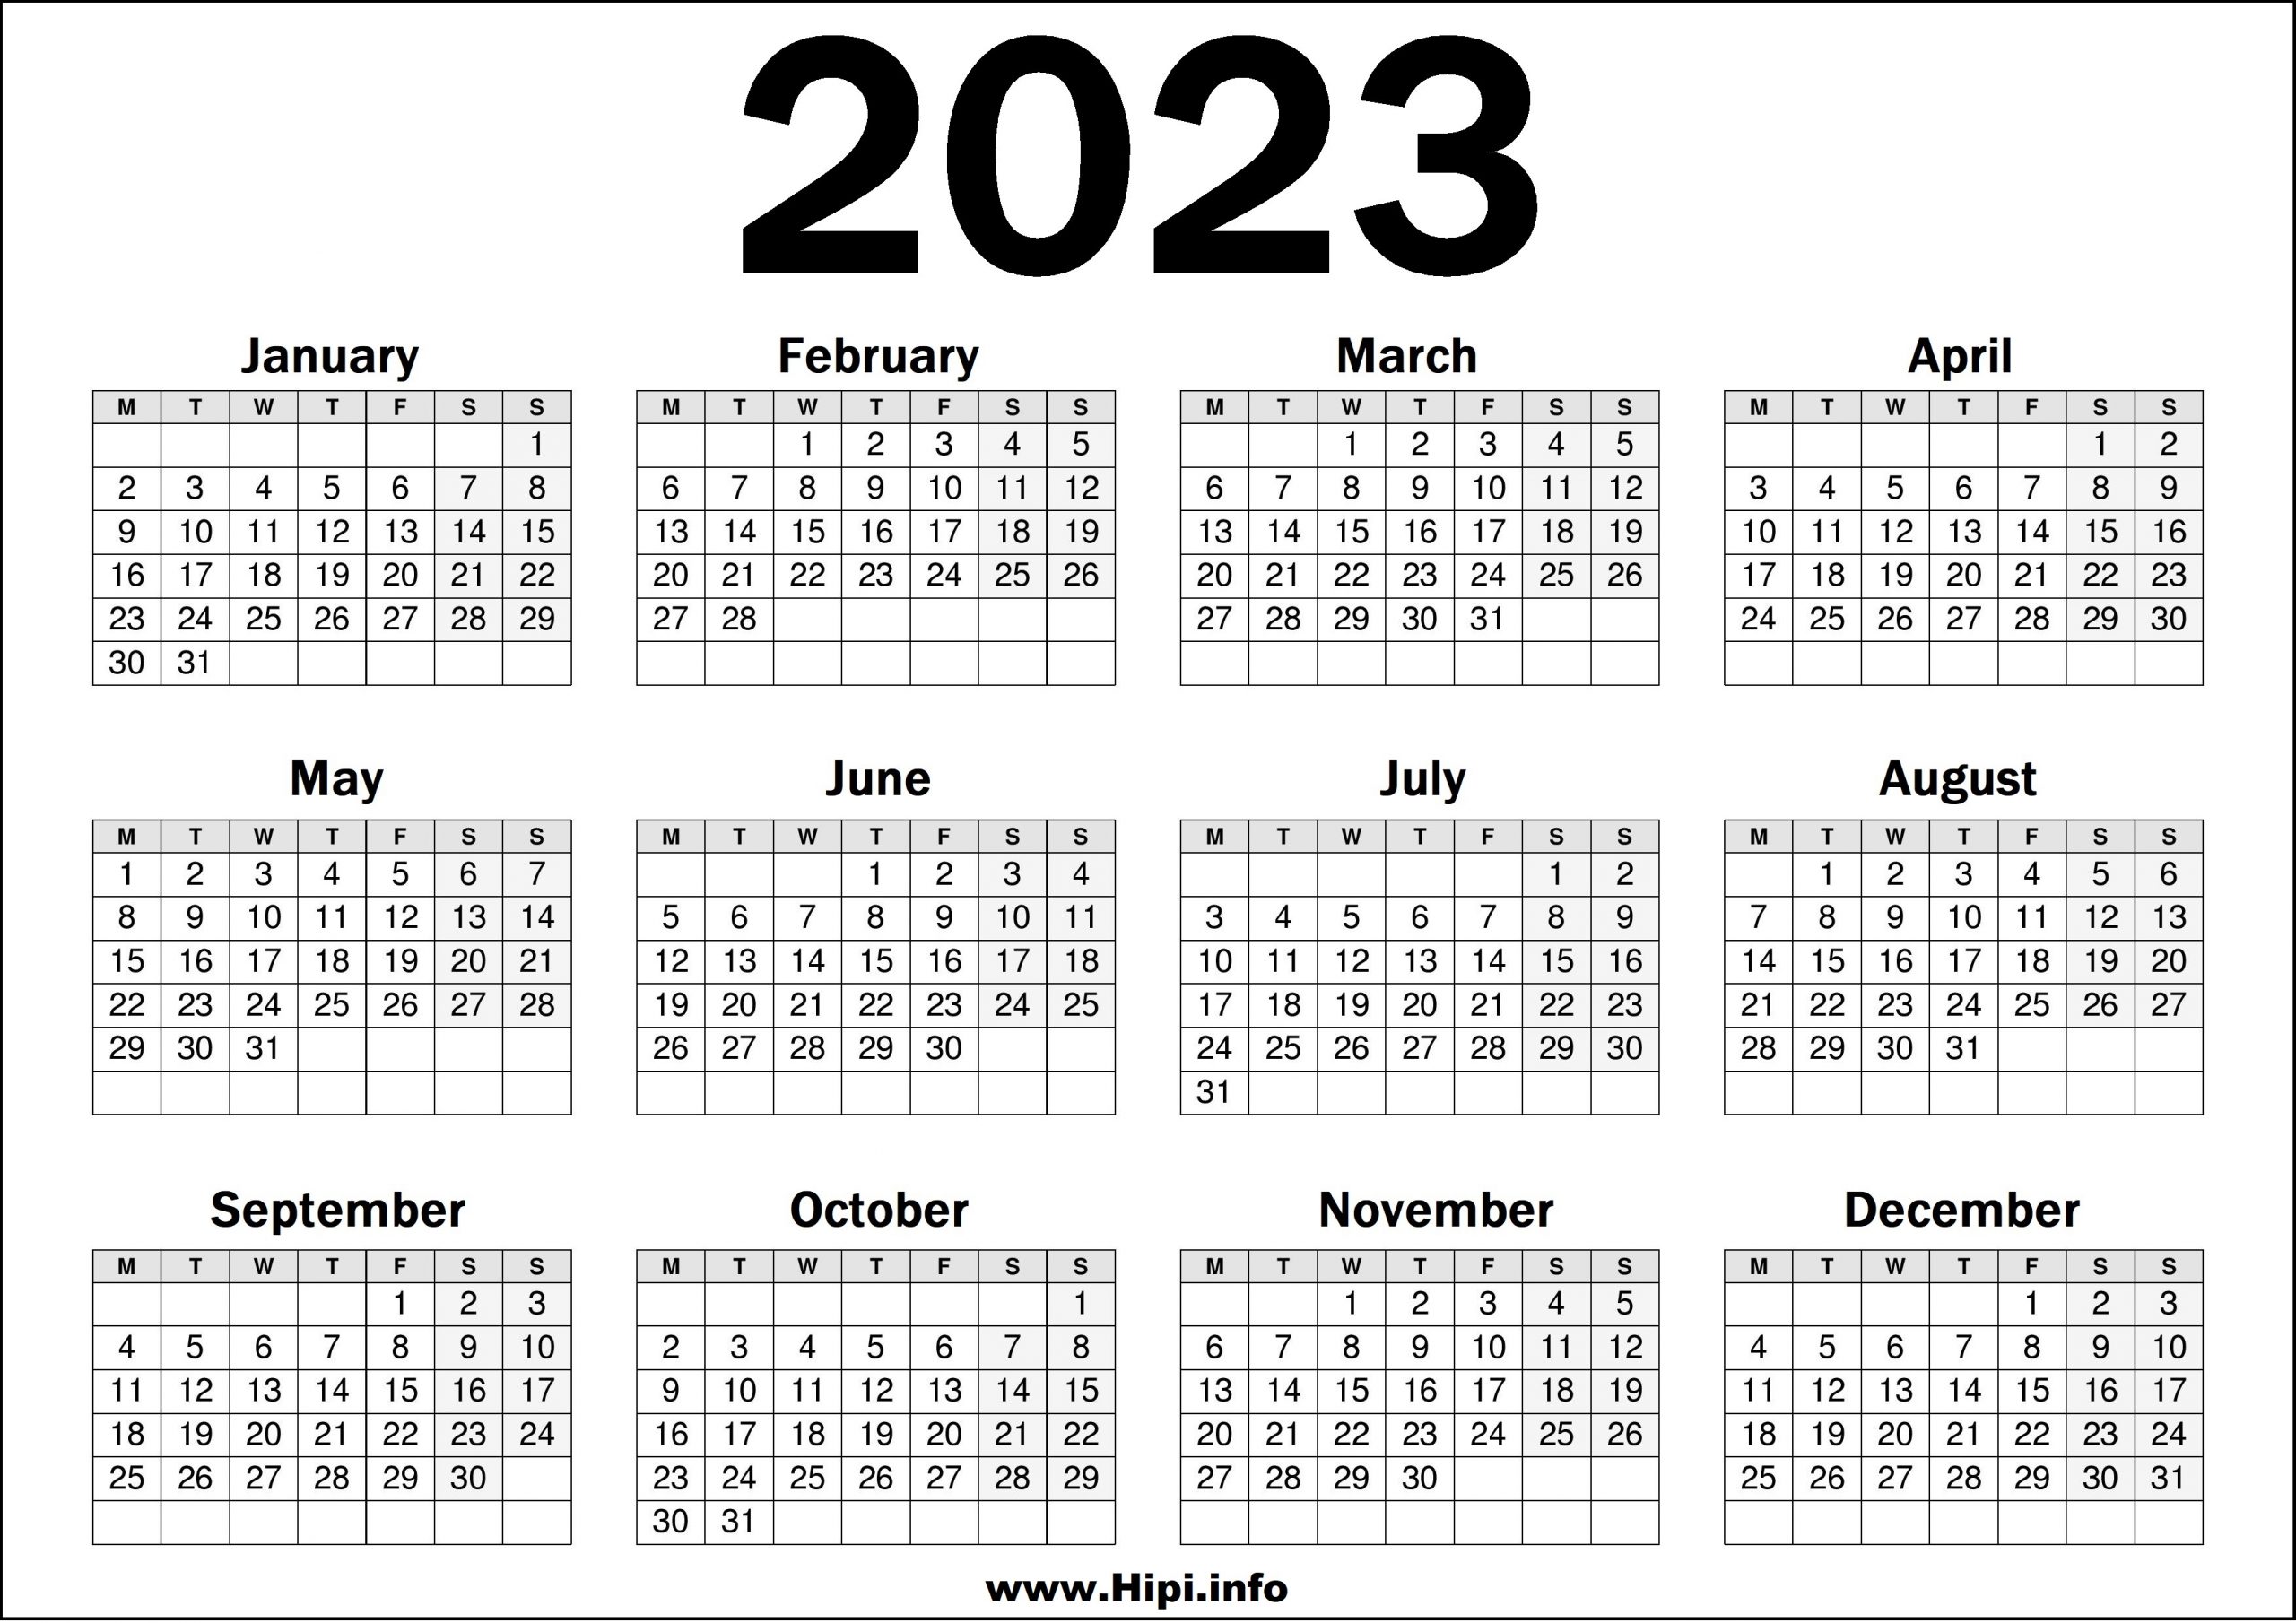 2023-united-kingdom-uk-calendar-printable-hipi-info